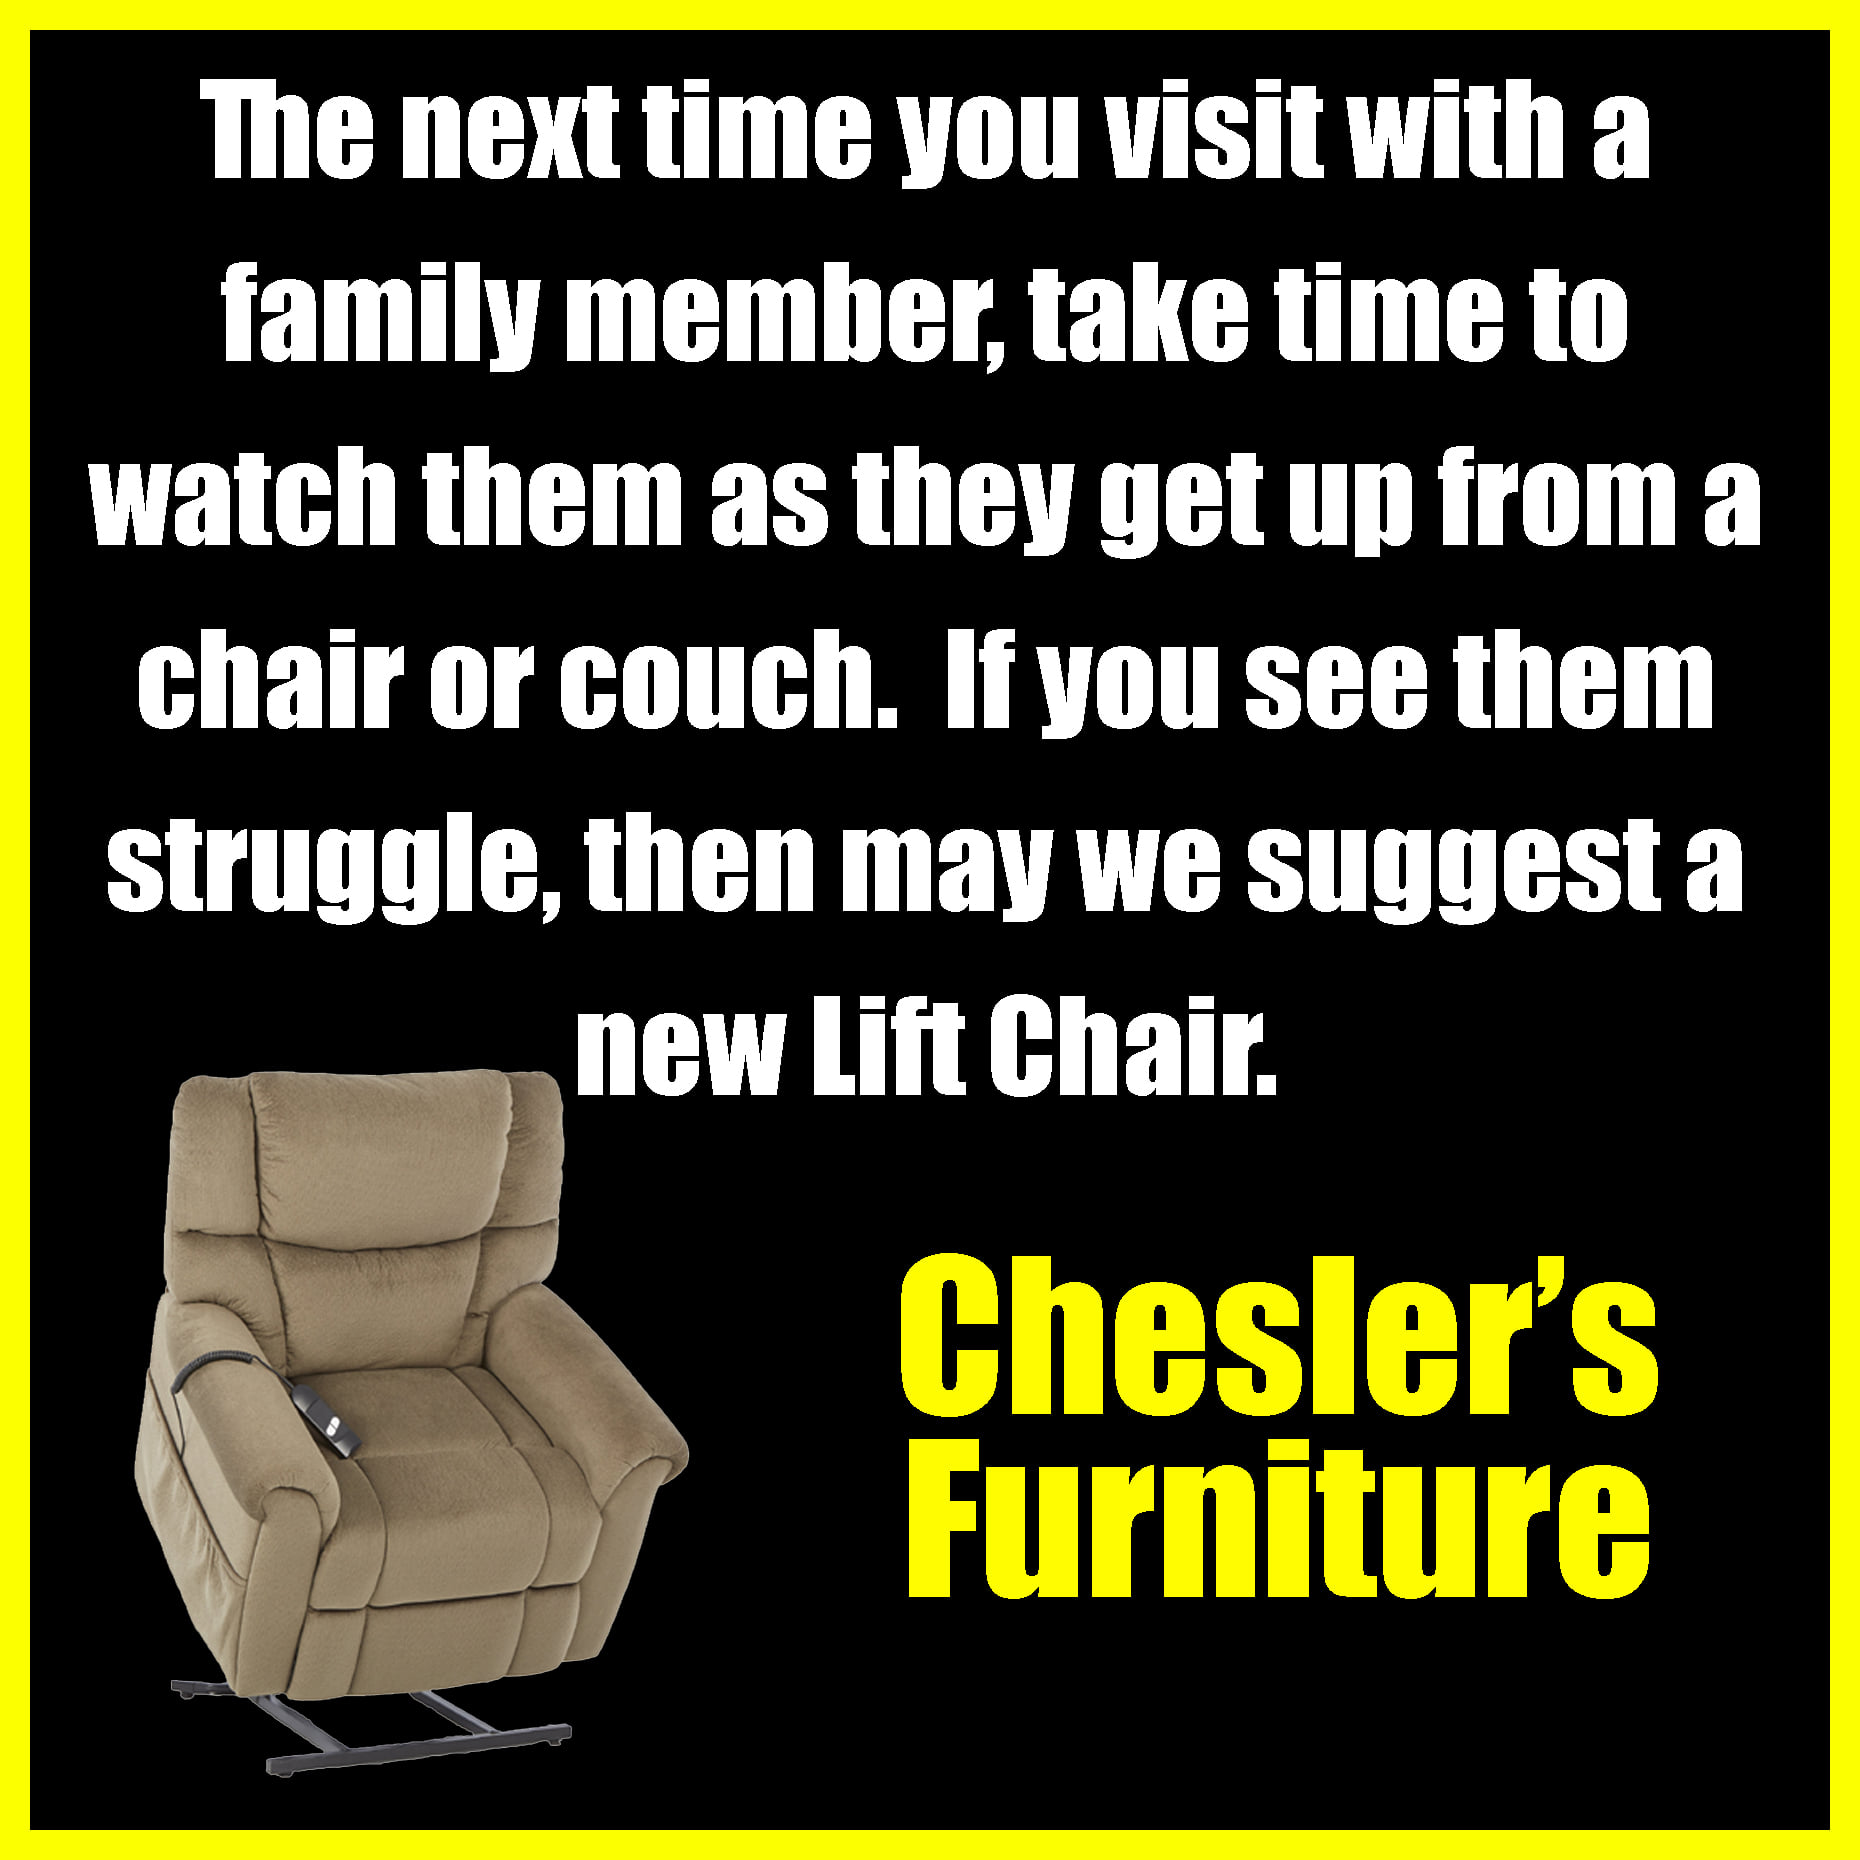 Chesler's Furniture